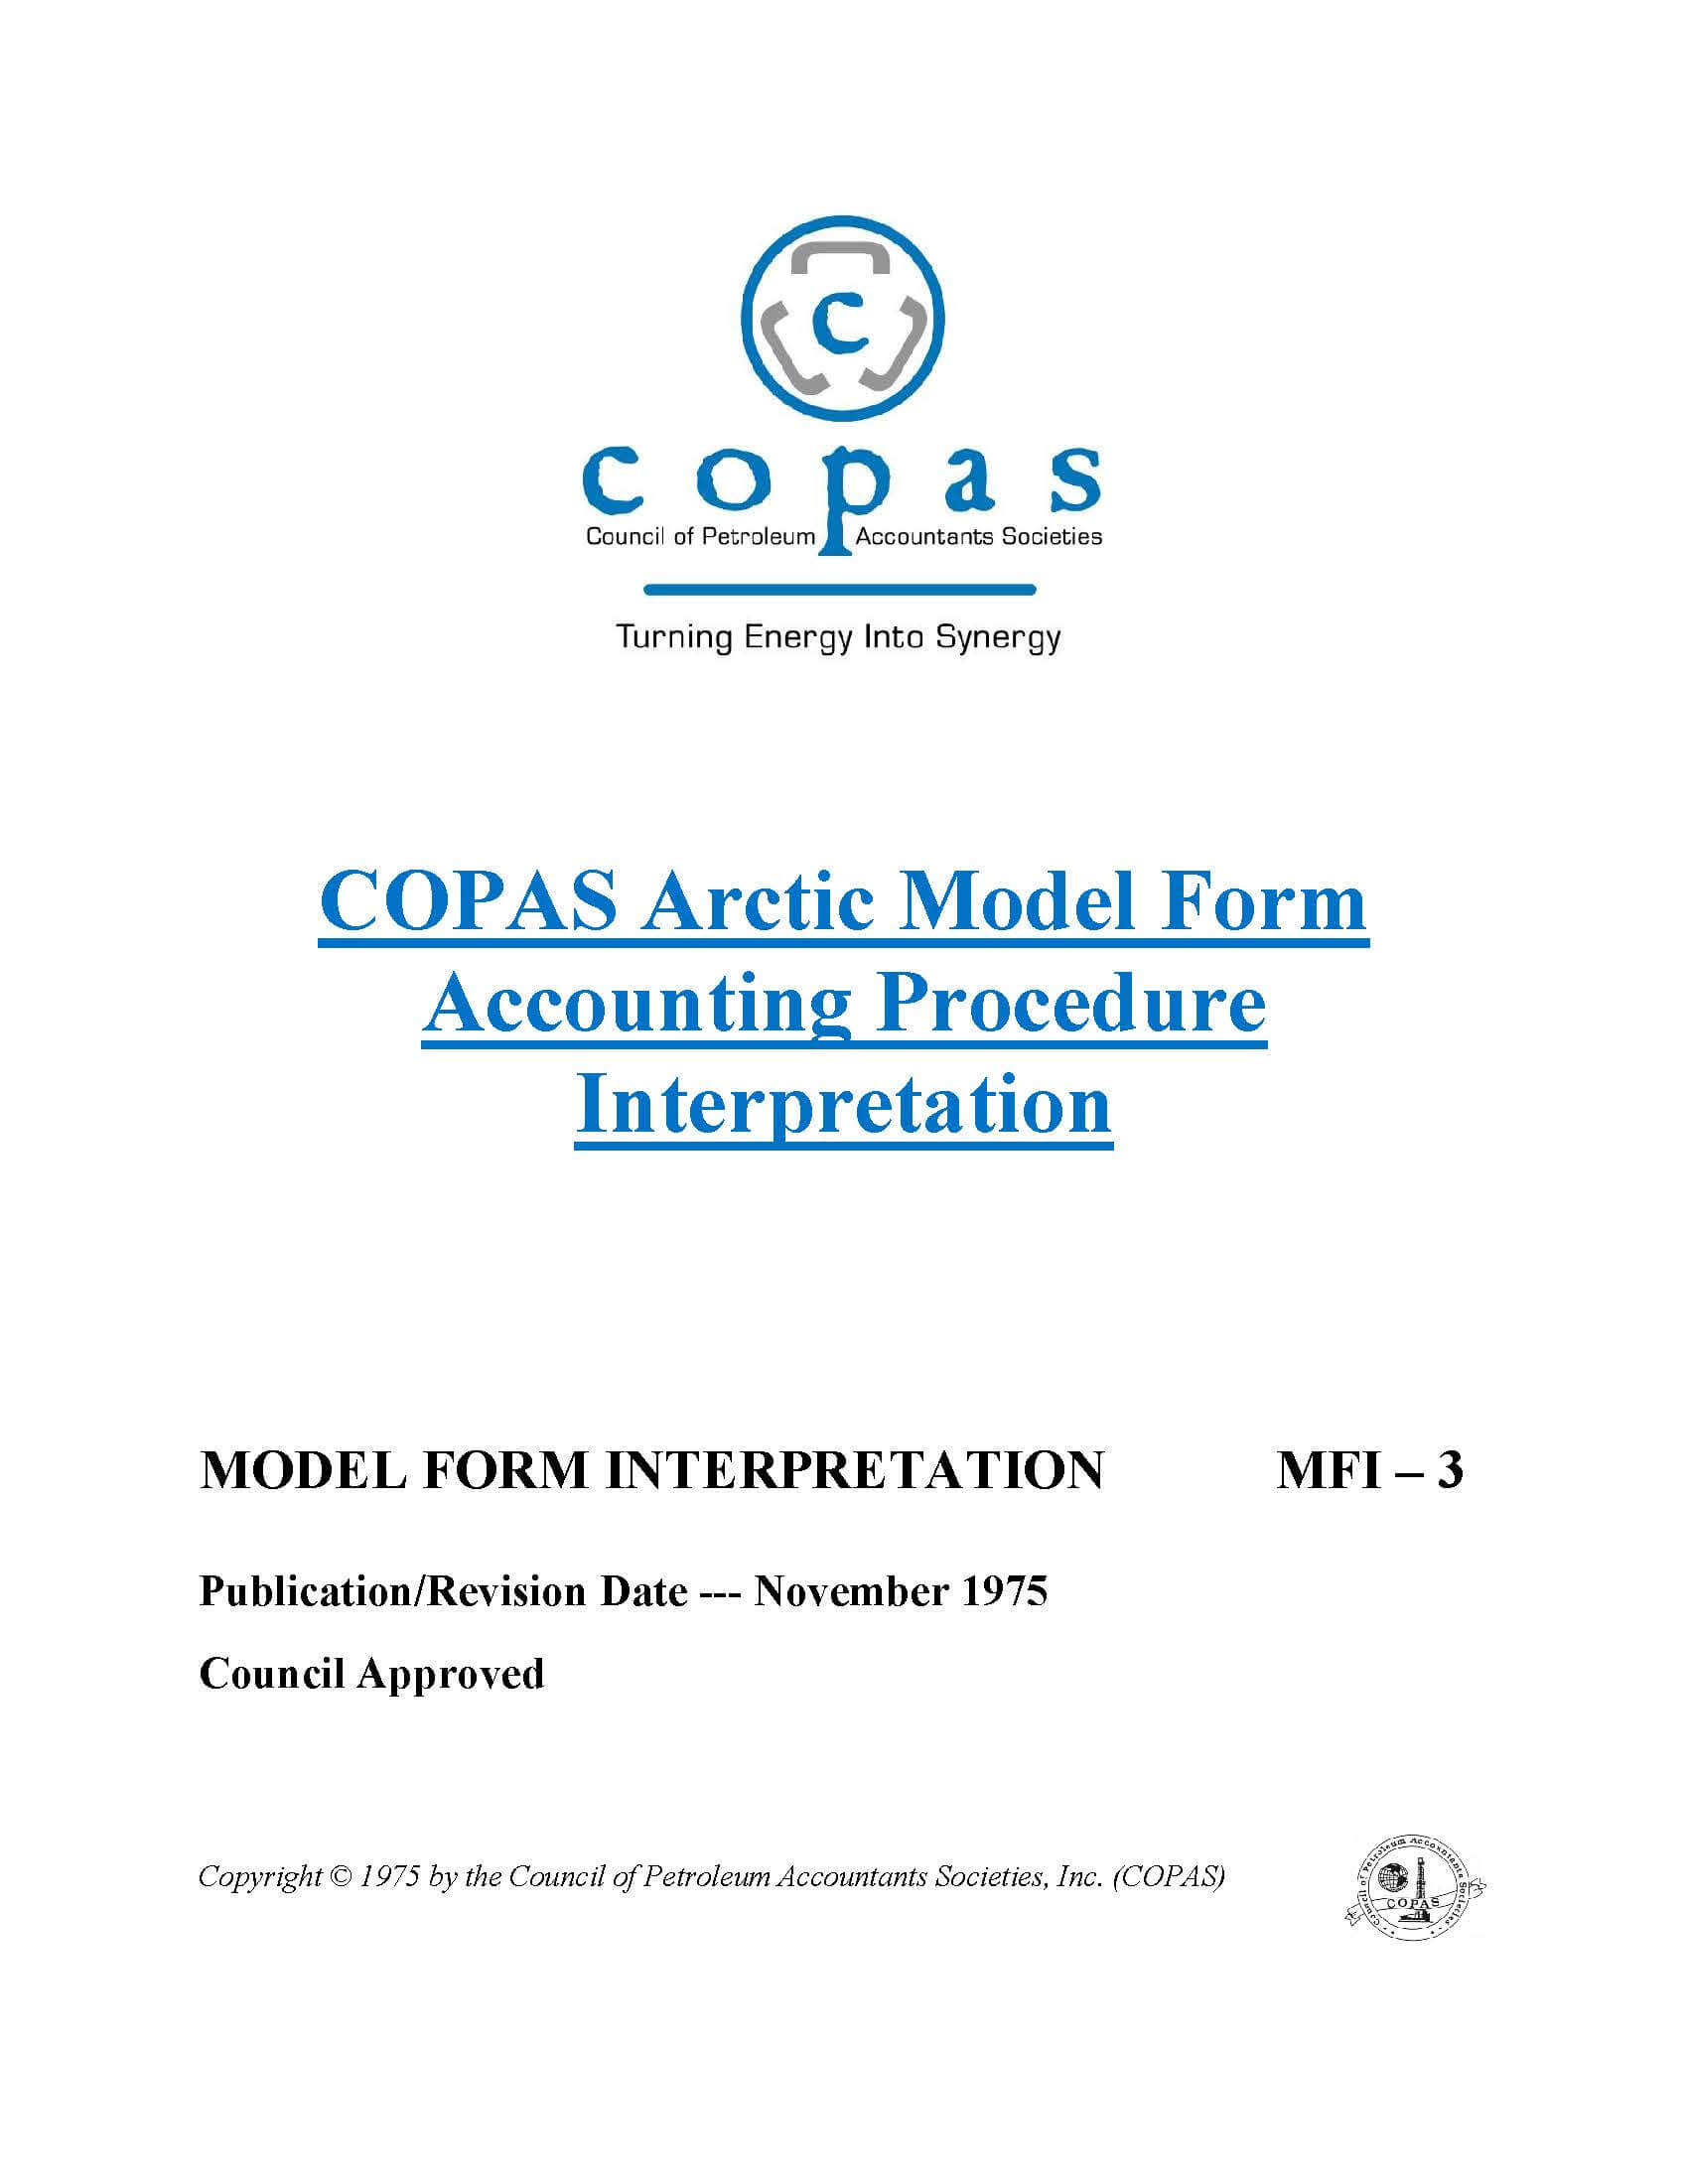 MFI-3 Arctic Model Form Accounting Procedure Interpretation - products MFI 3 Arctic Model Form Accounting Procedure Interpretation - Council of Petroleum Accountants Societies